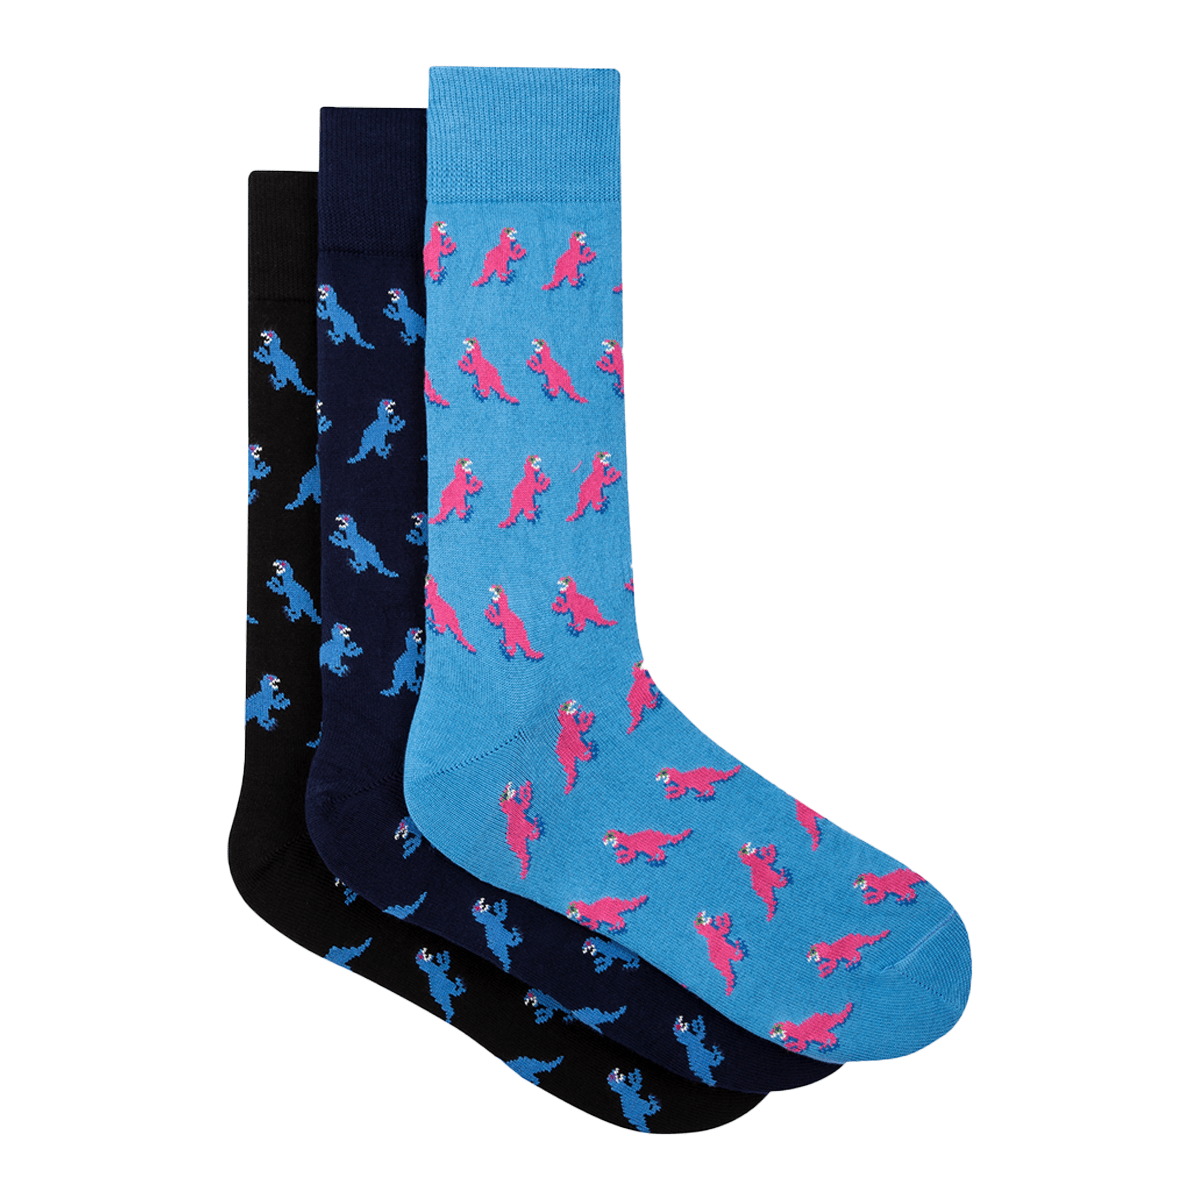 Paul Smith Multi-Coloured 'Dino' Socks Three Pack